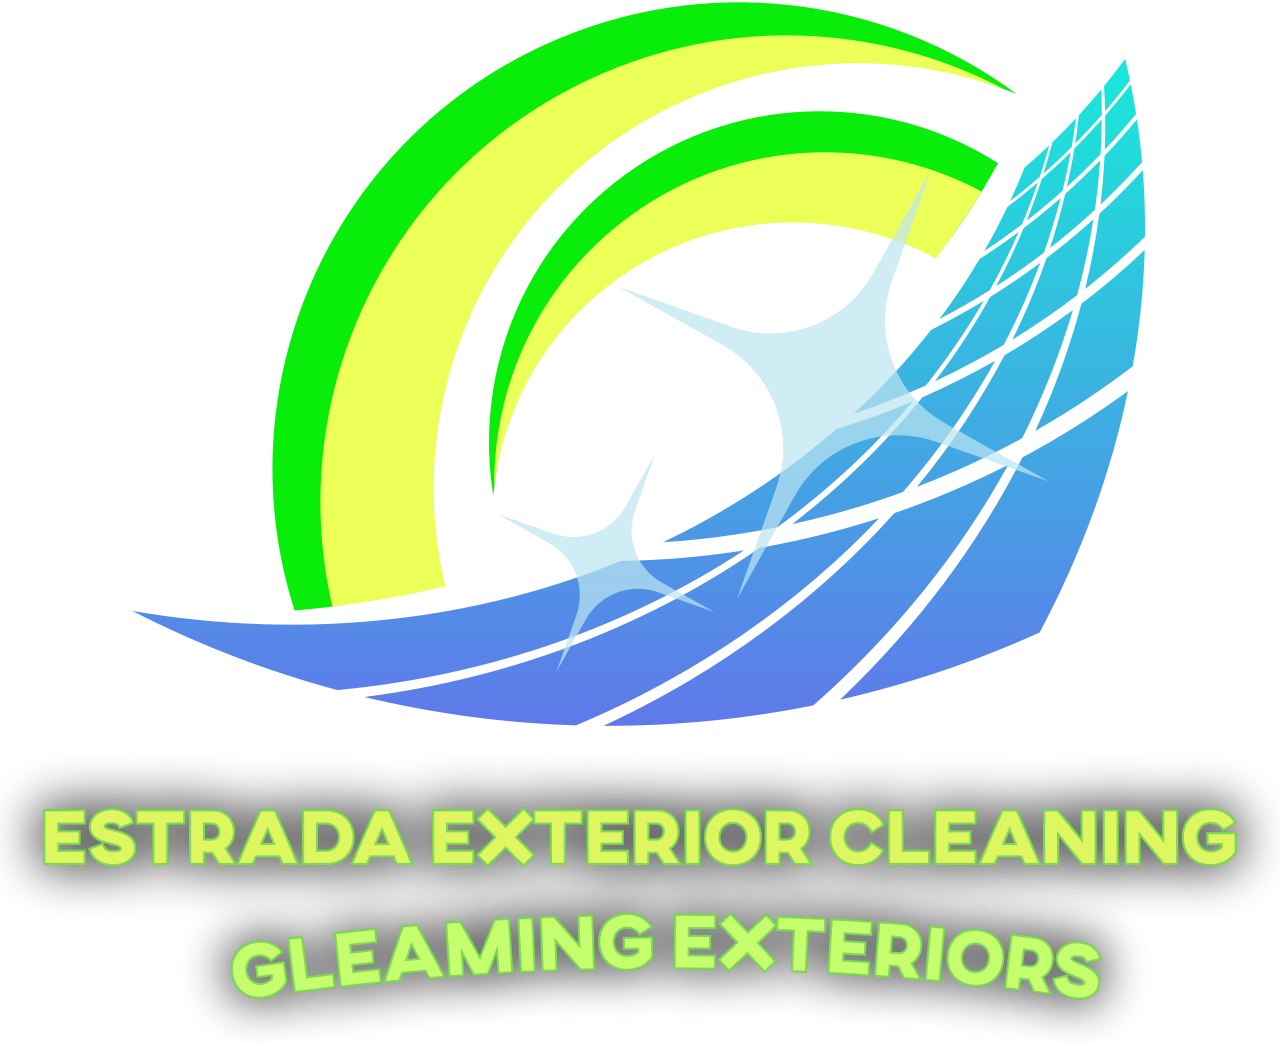 Estrada Exterior Cleaning Corp.'s logo